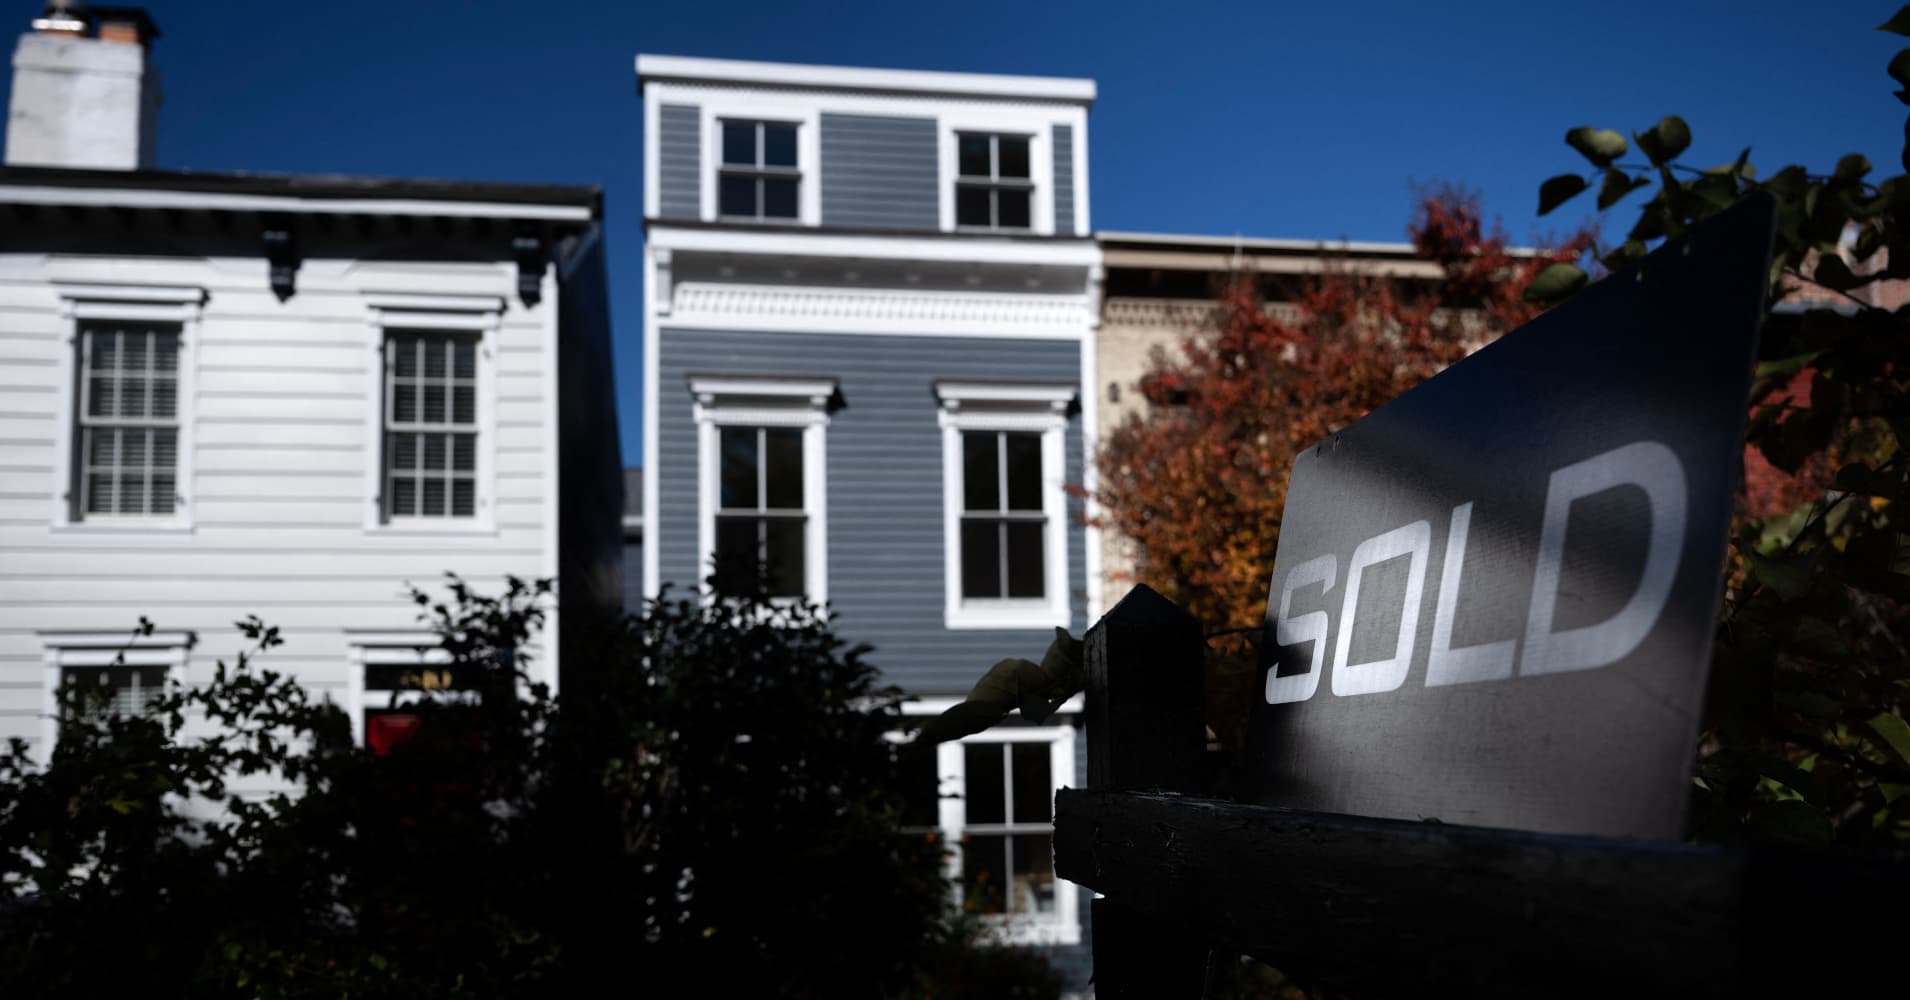 mortgage demand drops as interest rates soar over 7%